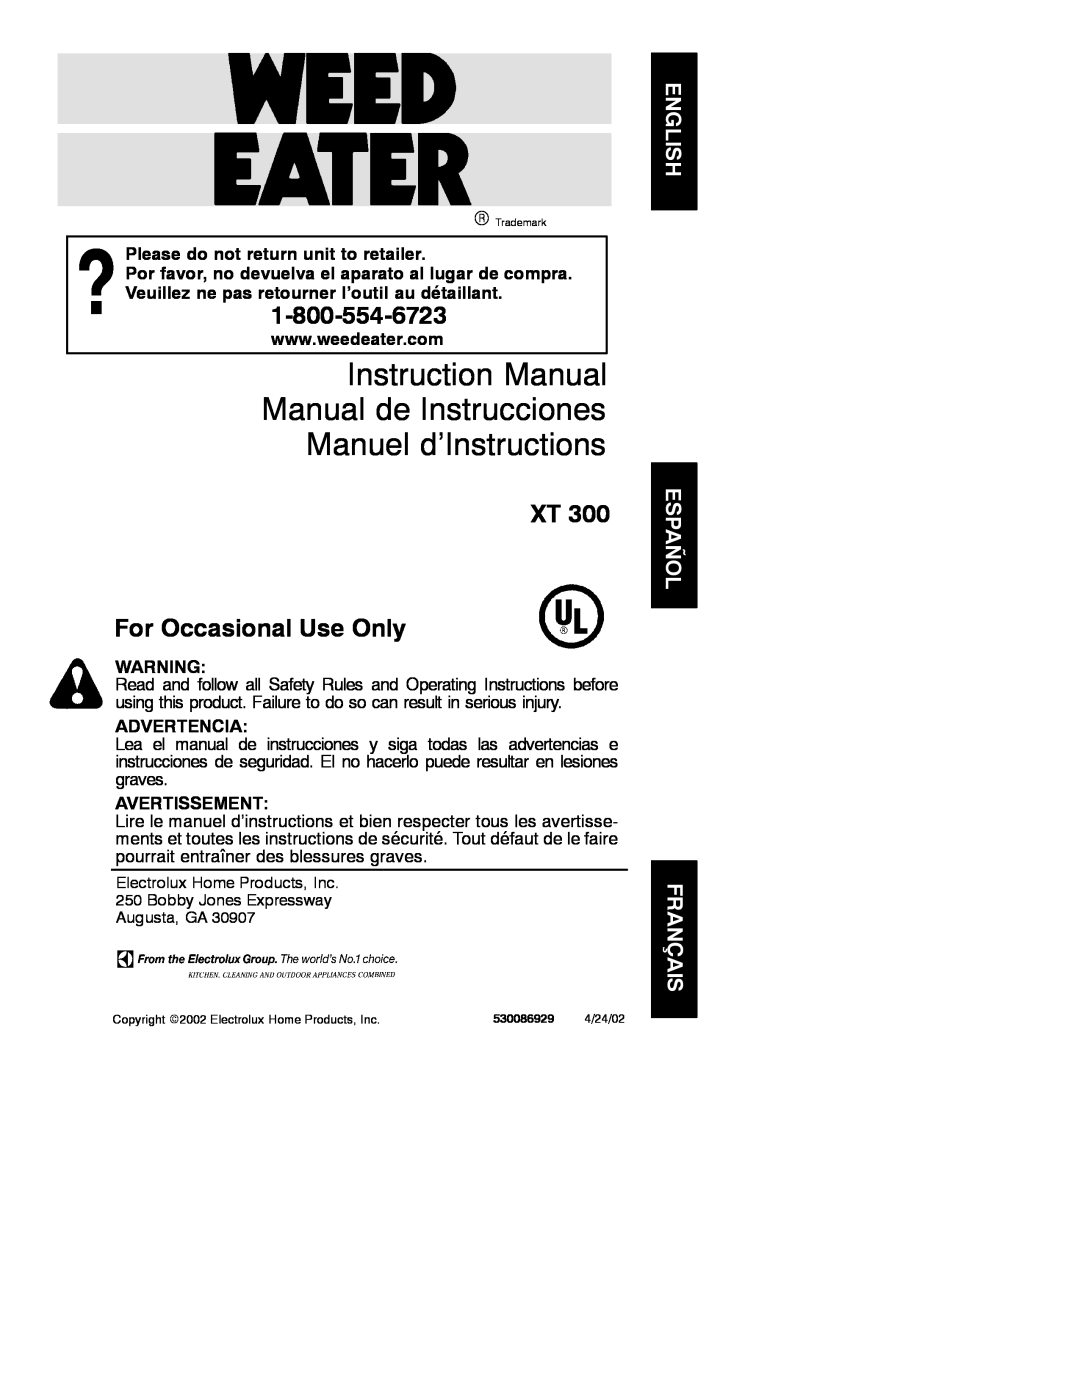 Weed Eater XT300 instruction manual Please do not return unit to retailer, Advertencia, Avertissement 